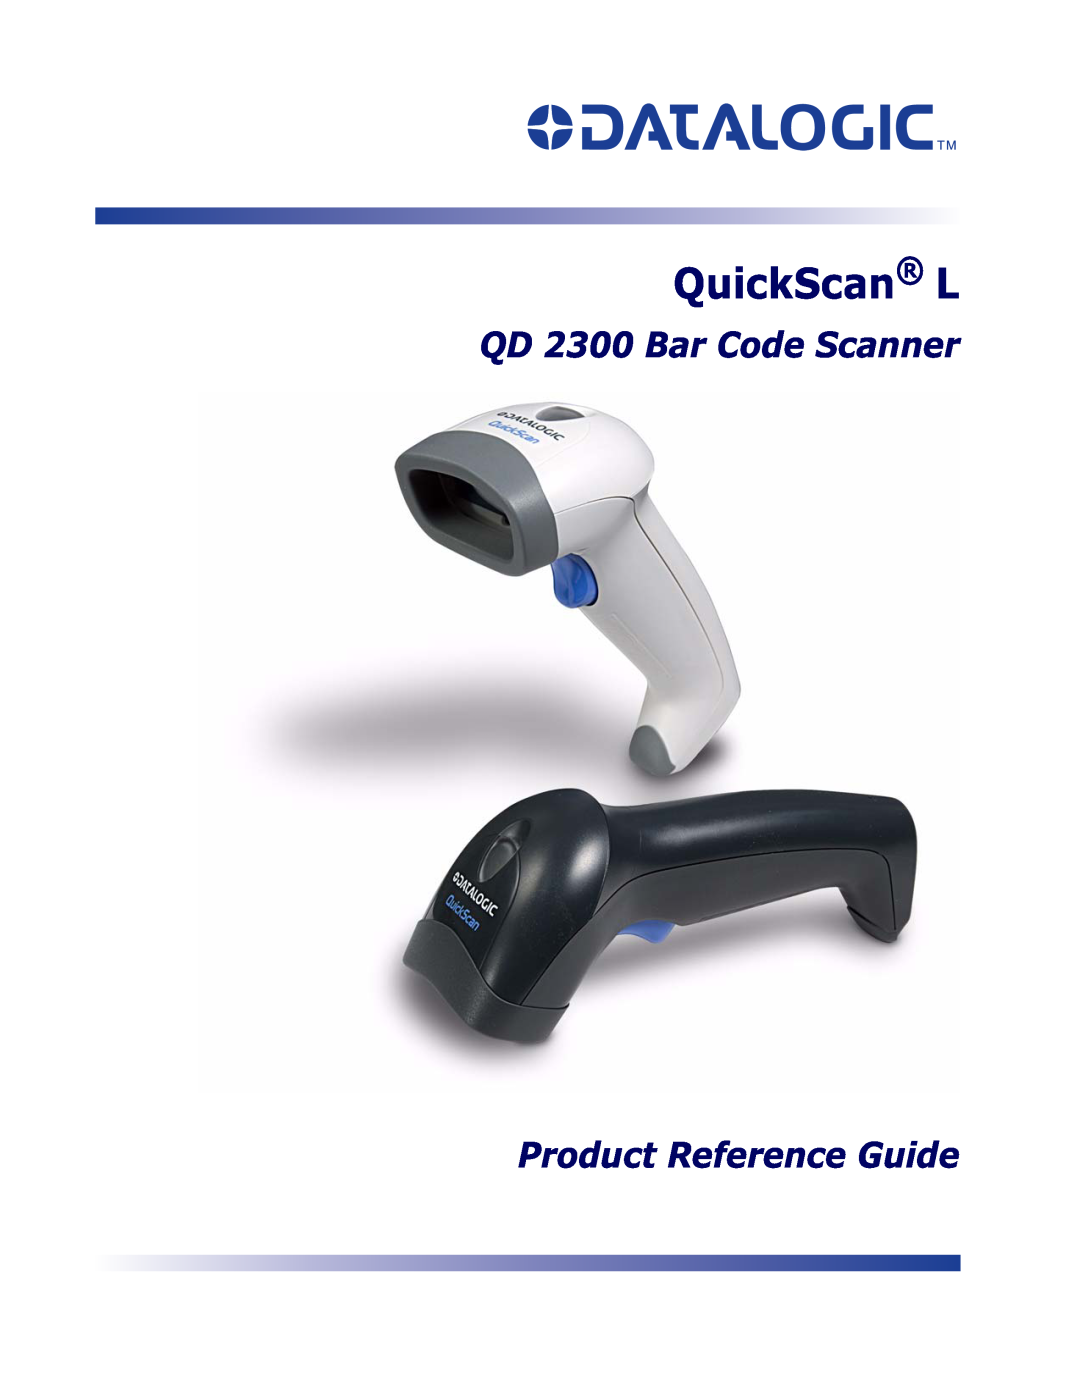 Datalogic Scanning manual QuickScan L, QD 2300 Bar Code Scanner, Product Reference Guide 